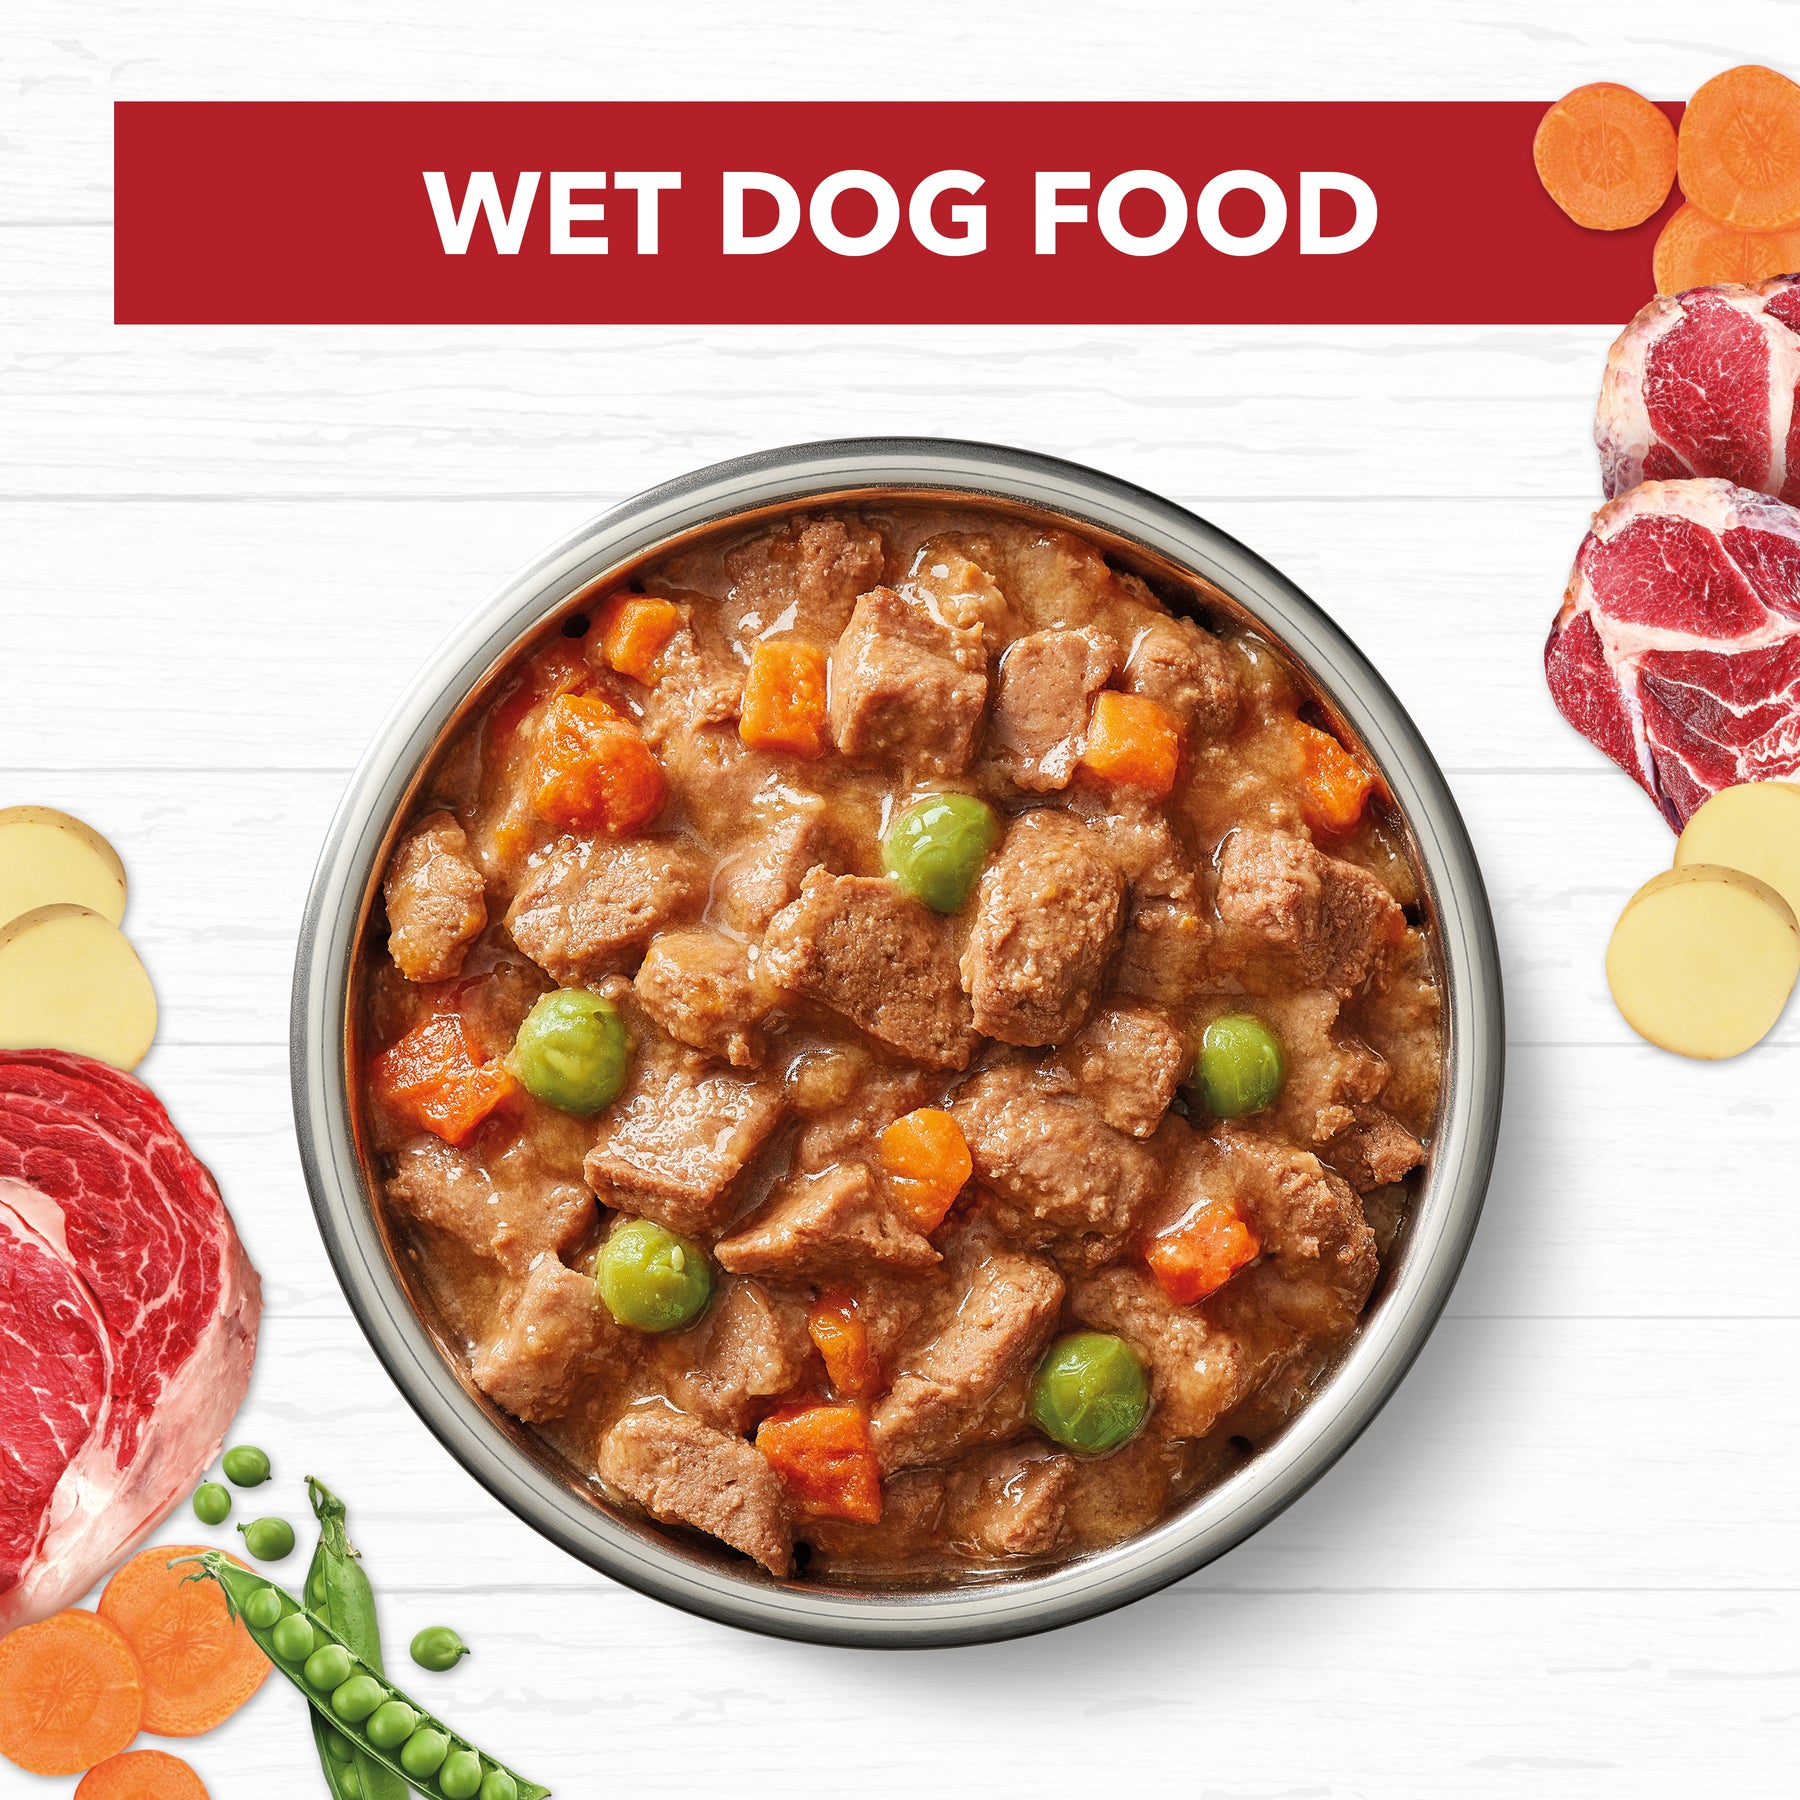 Grain Free Adult Wet Dog Food Beef Stew 400g